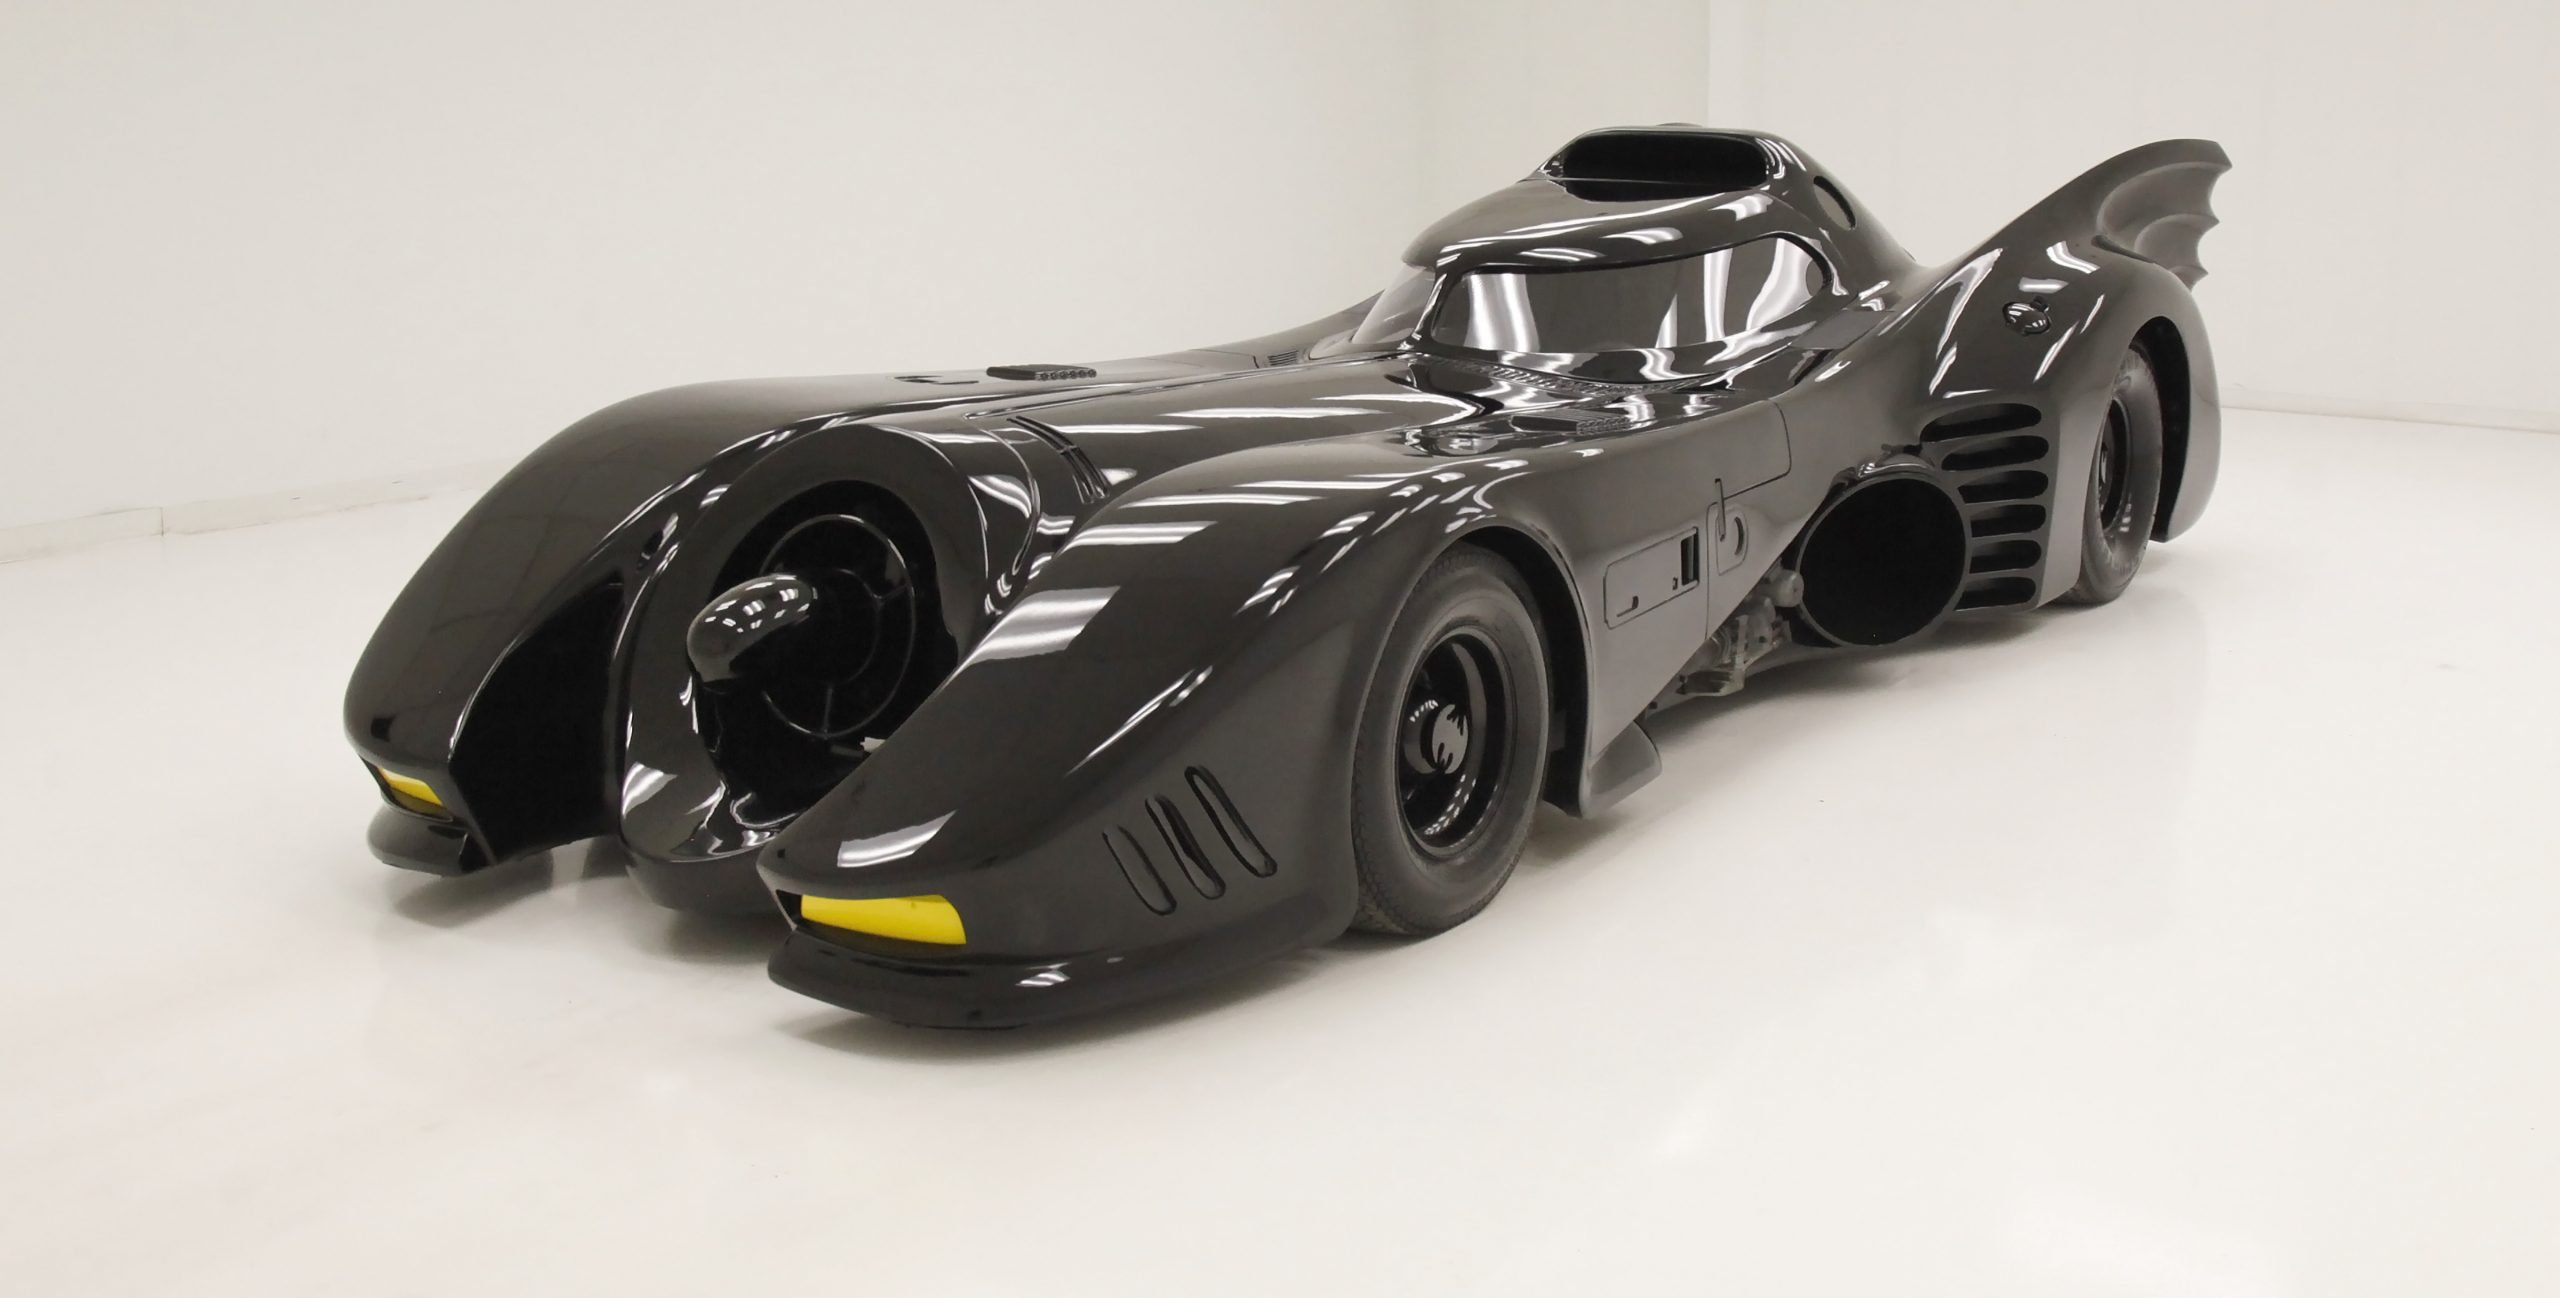 Hot Wheels Batman (1989) Batmobile Collectors Car New Sealed Michael Keaton